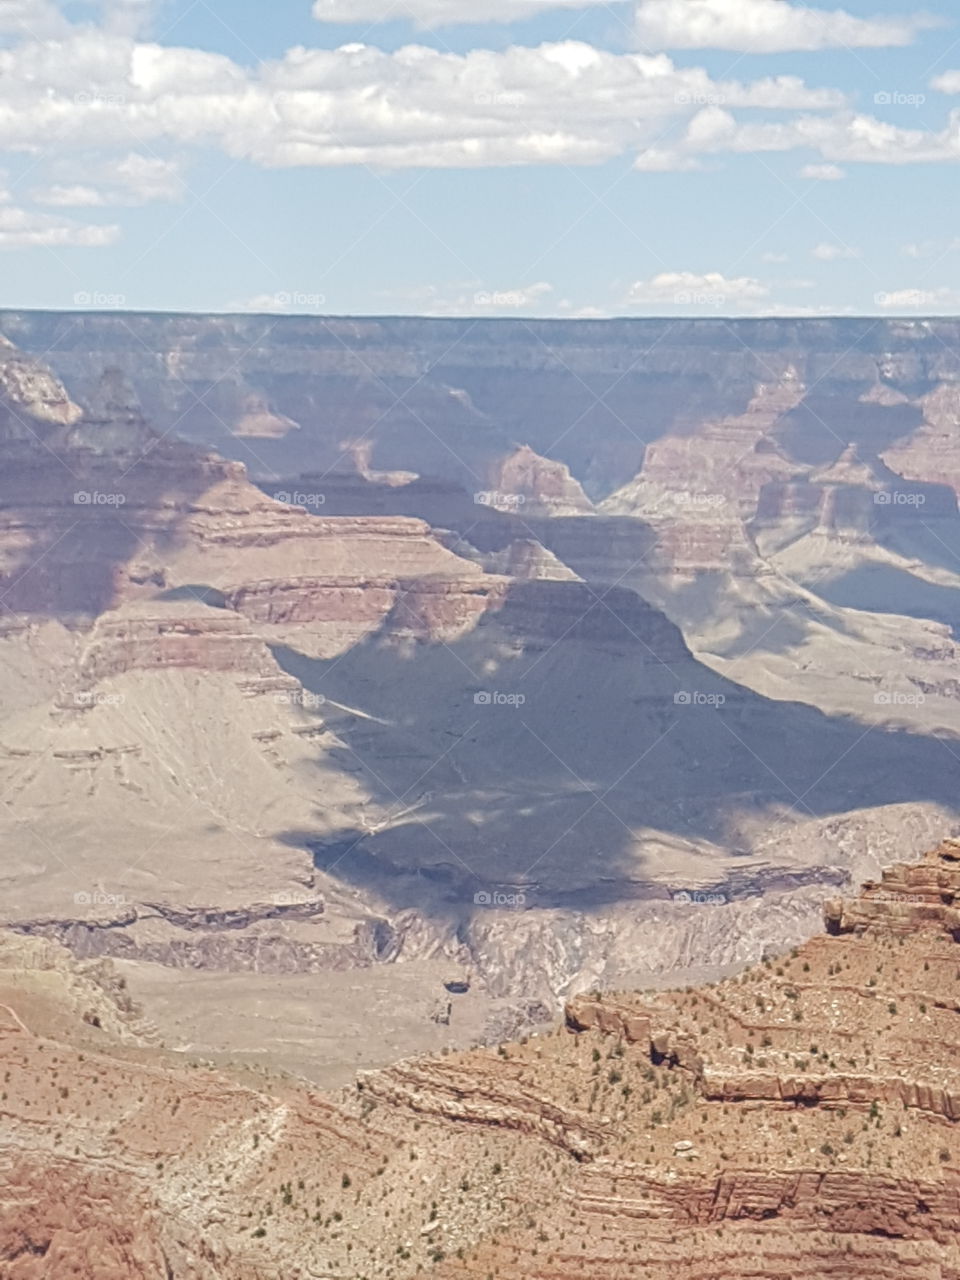 Grand Canyon-2